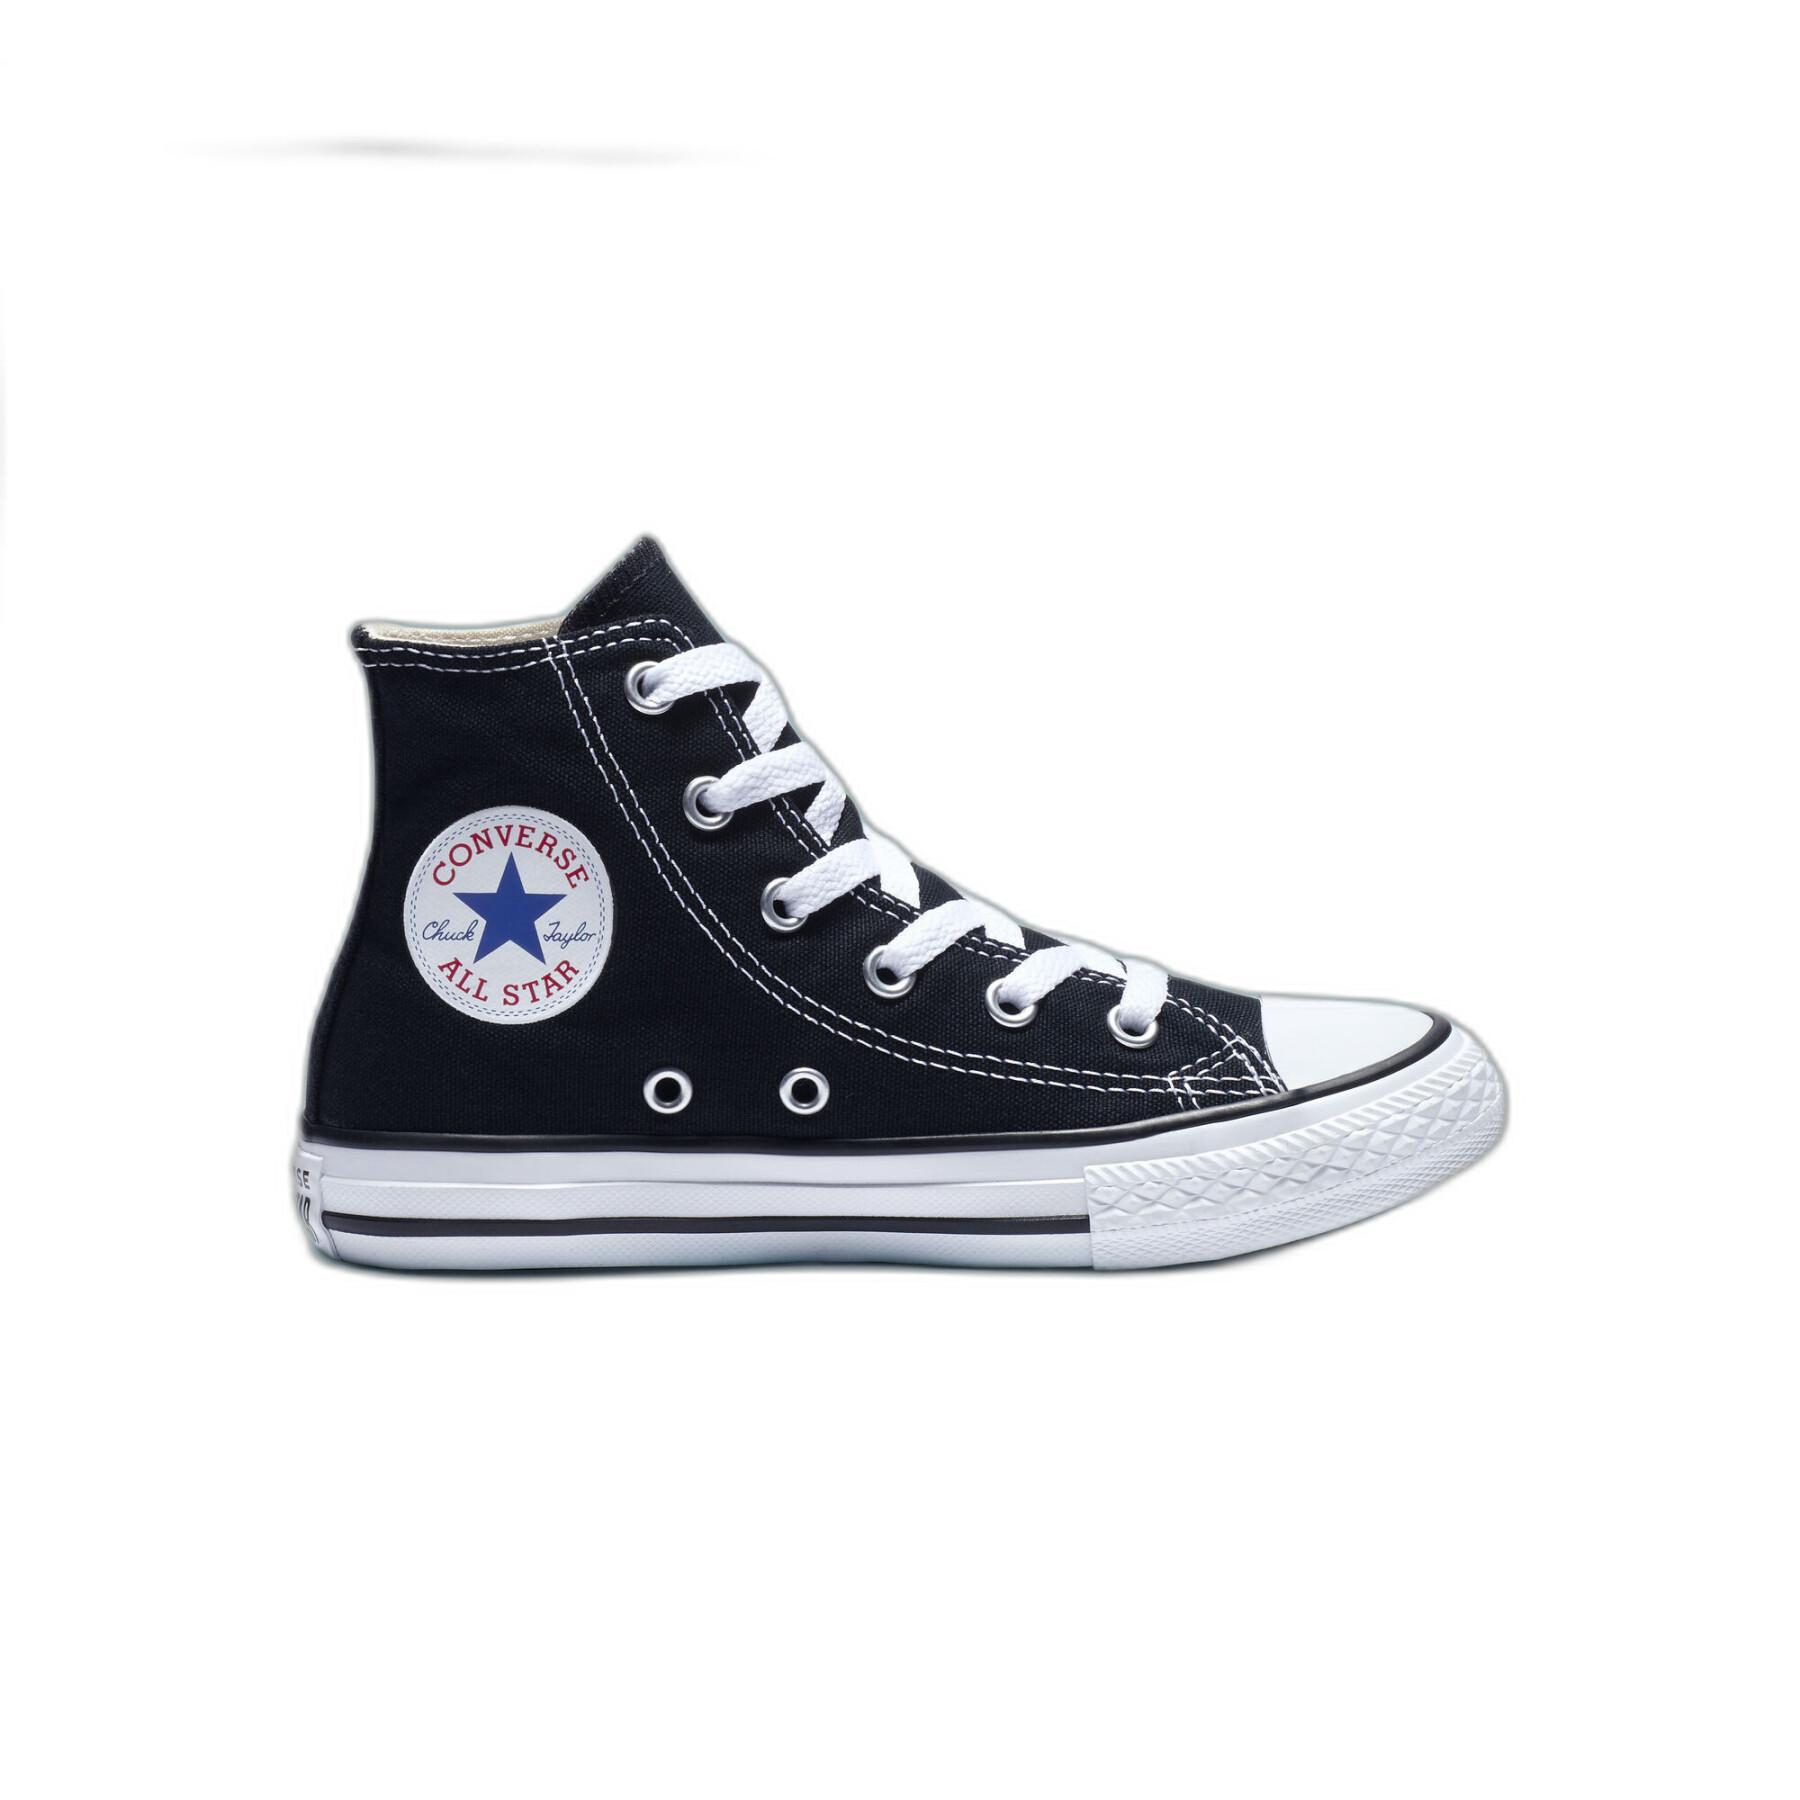 Children's sneakers Converse Chuck Taylor All Star Hi